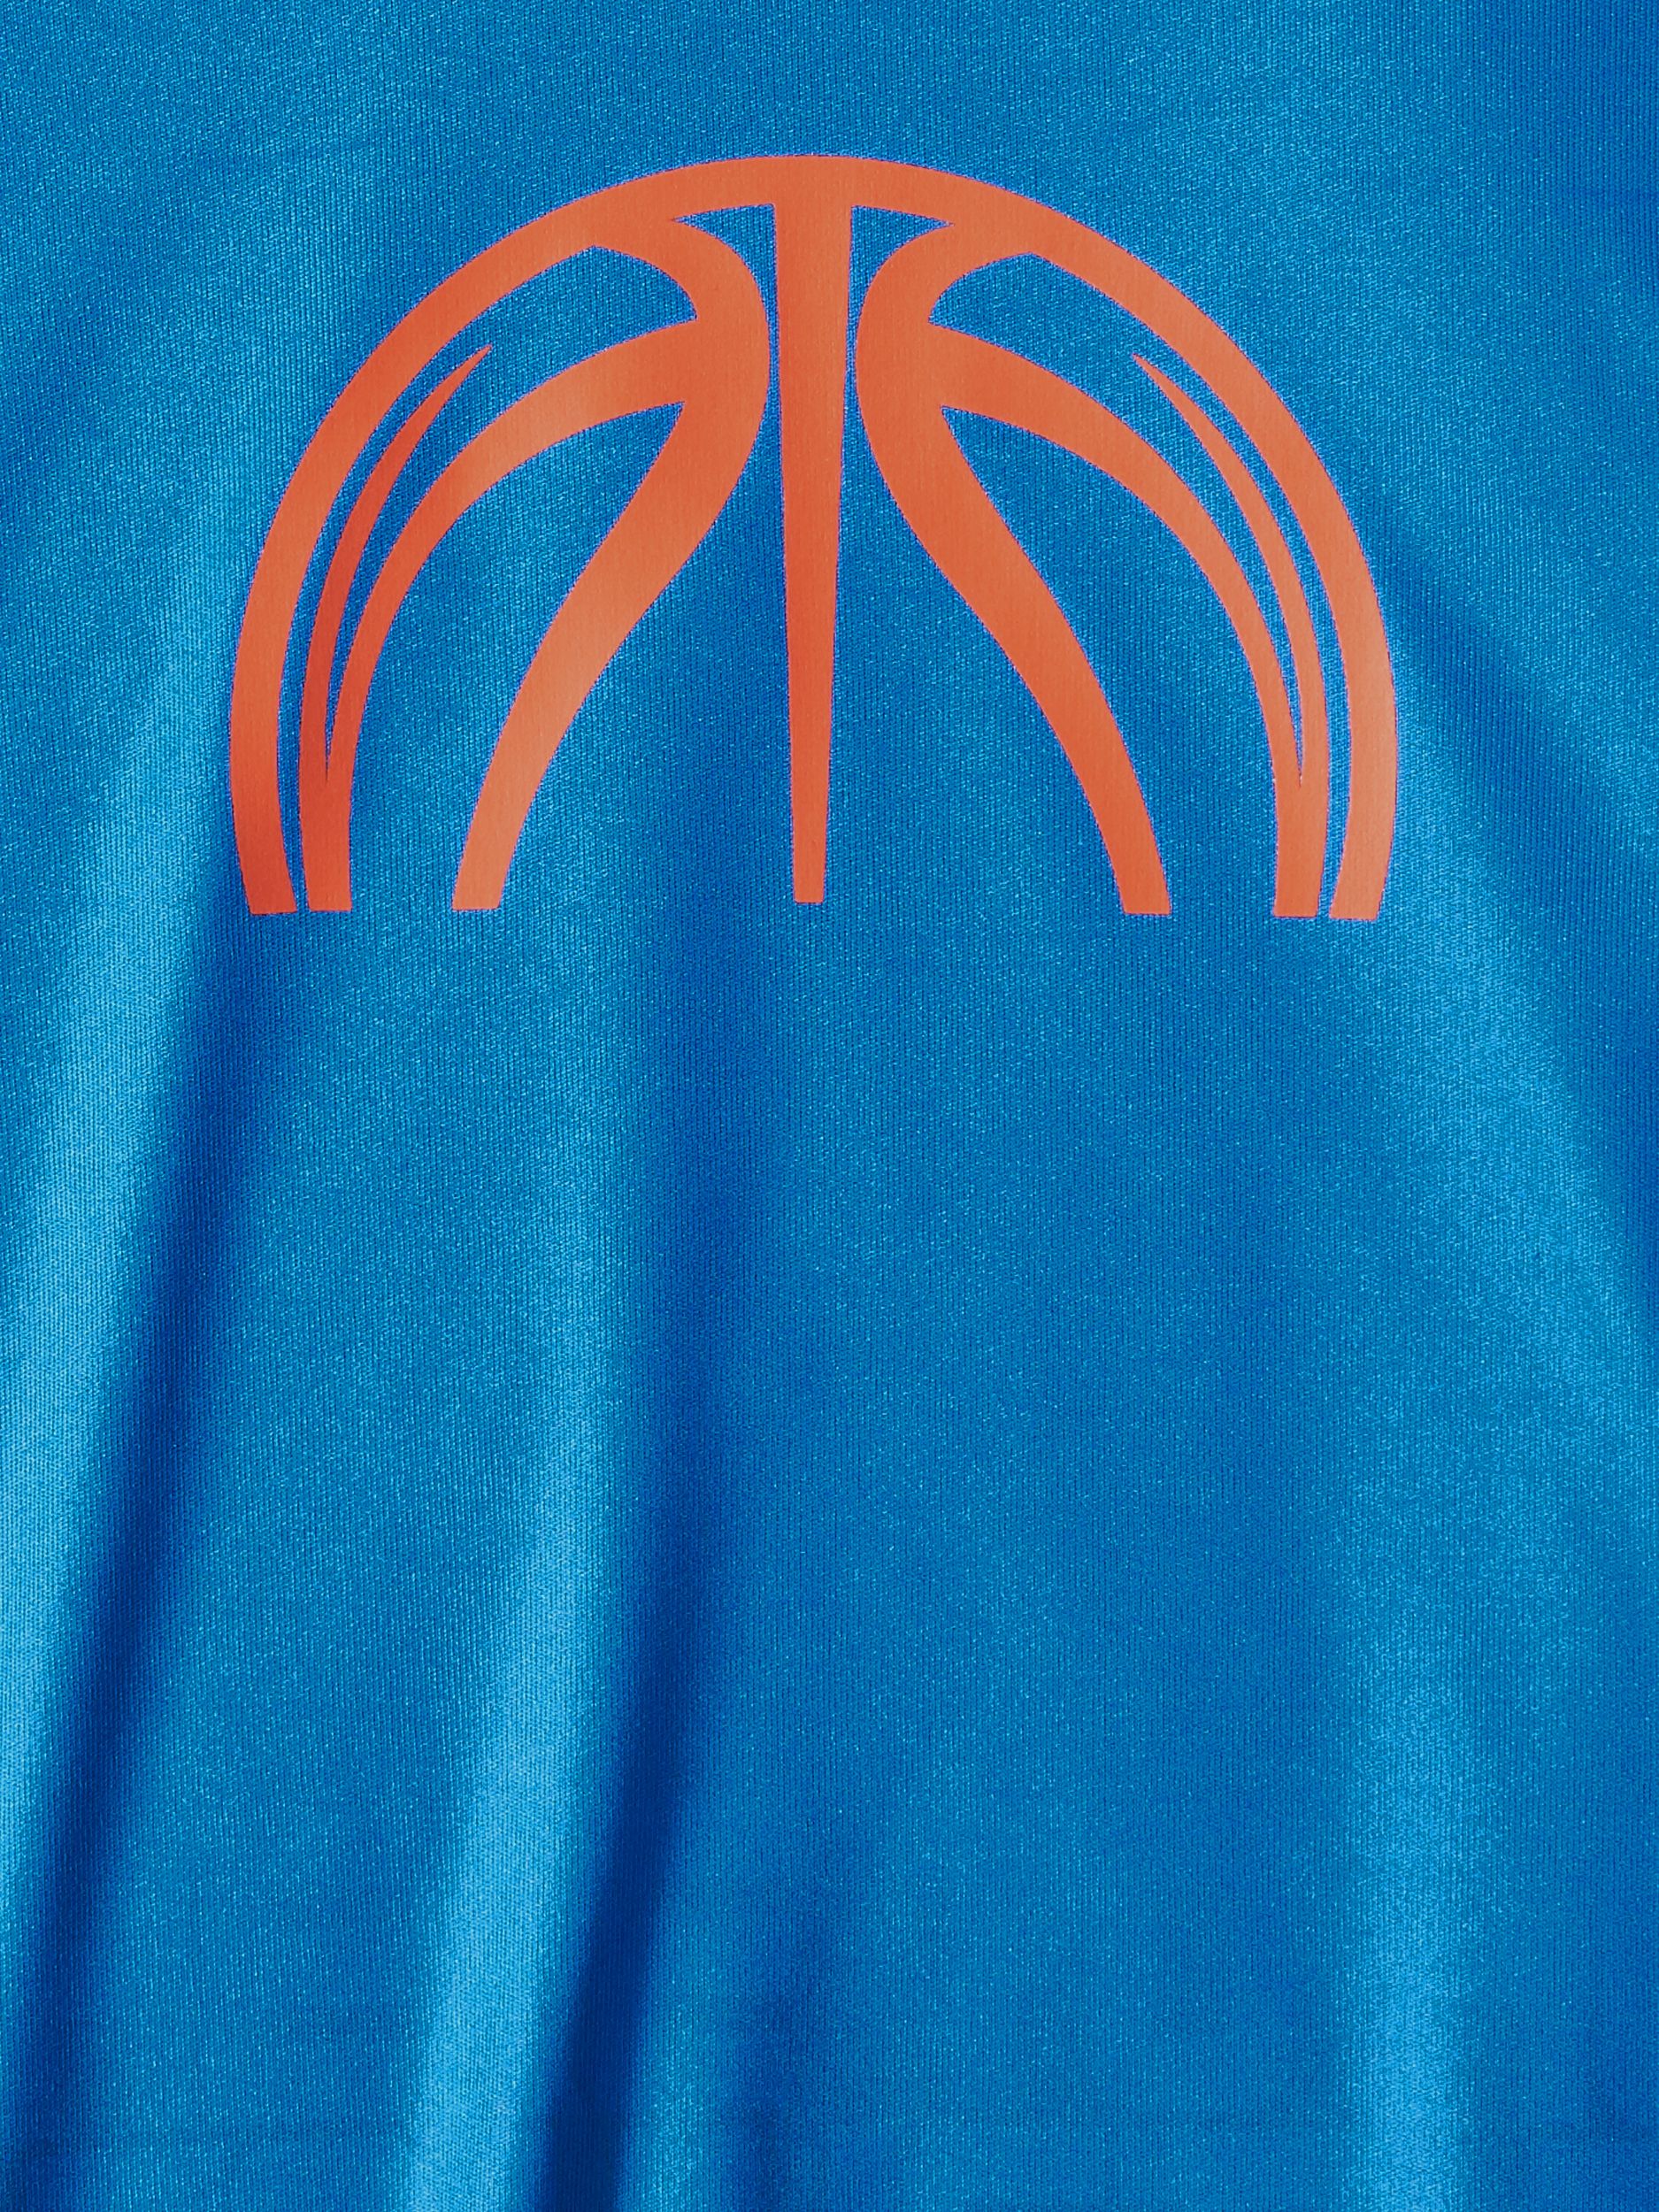 Athletic Works Short Sleeve Graphic & Solid T-Shirt, 2-Pack Set Value Bundle (Little Boys & Big Boys) - image 2 of 3